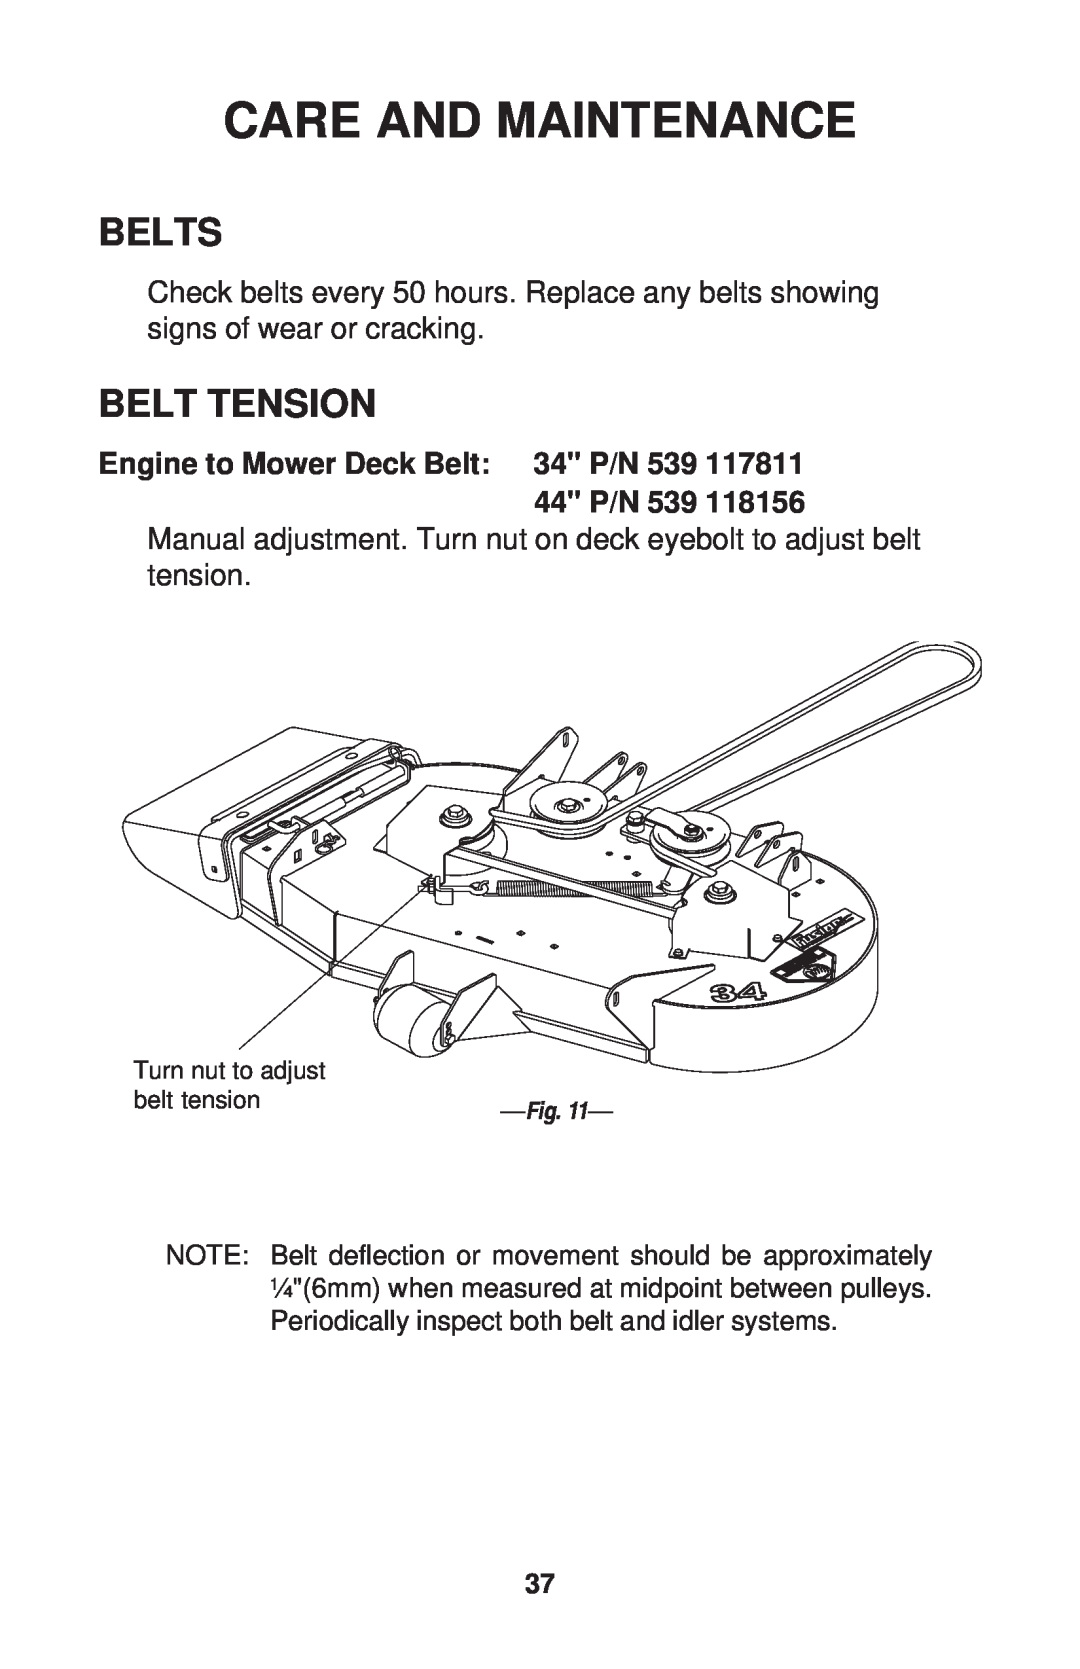 Dixon ZTR 34, ZTR 44, ZTR 34 Belts, Belt Tension, Care And Maintenance, Engine to Mower Deck Belt 34 P/N 539 117811 44 P/N 